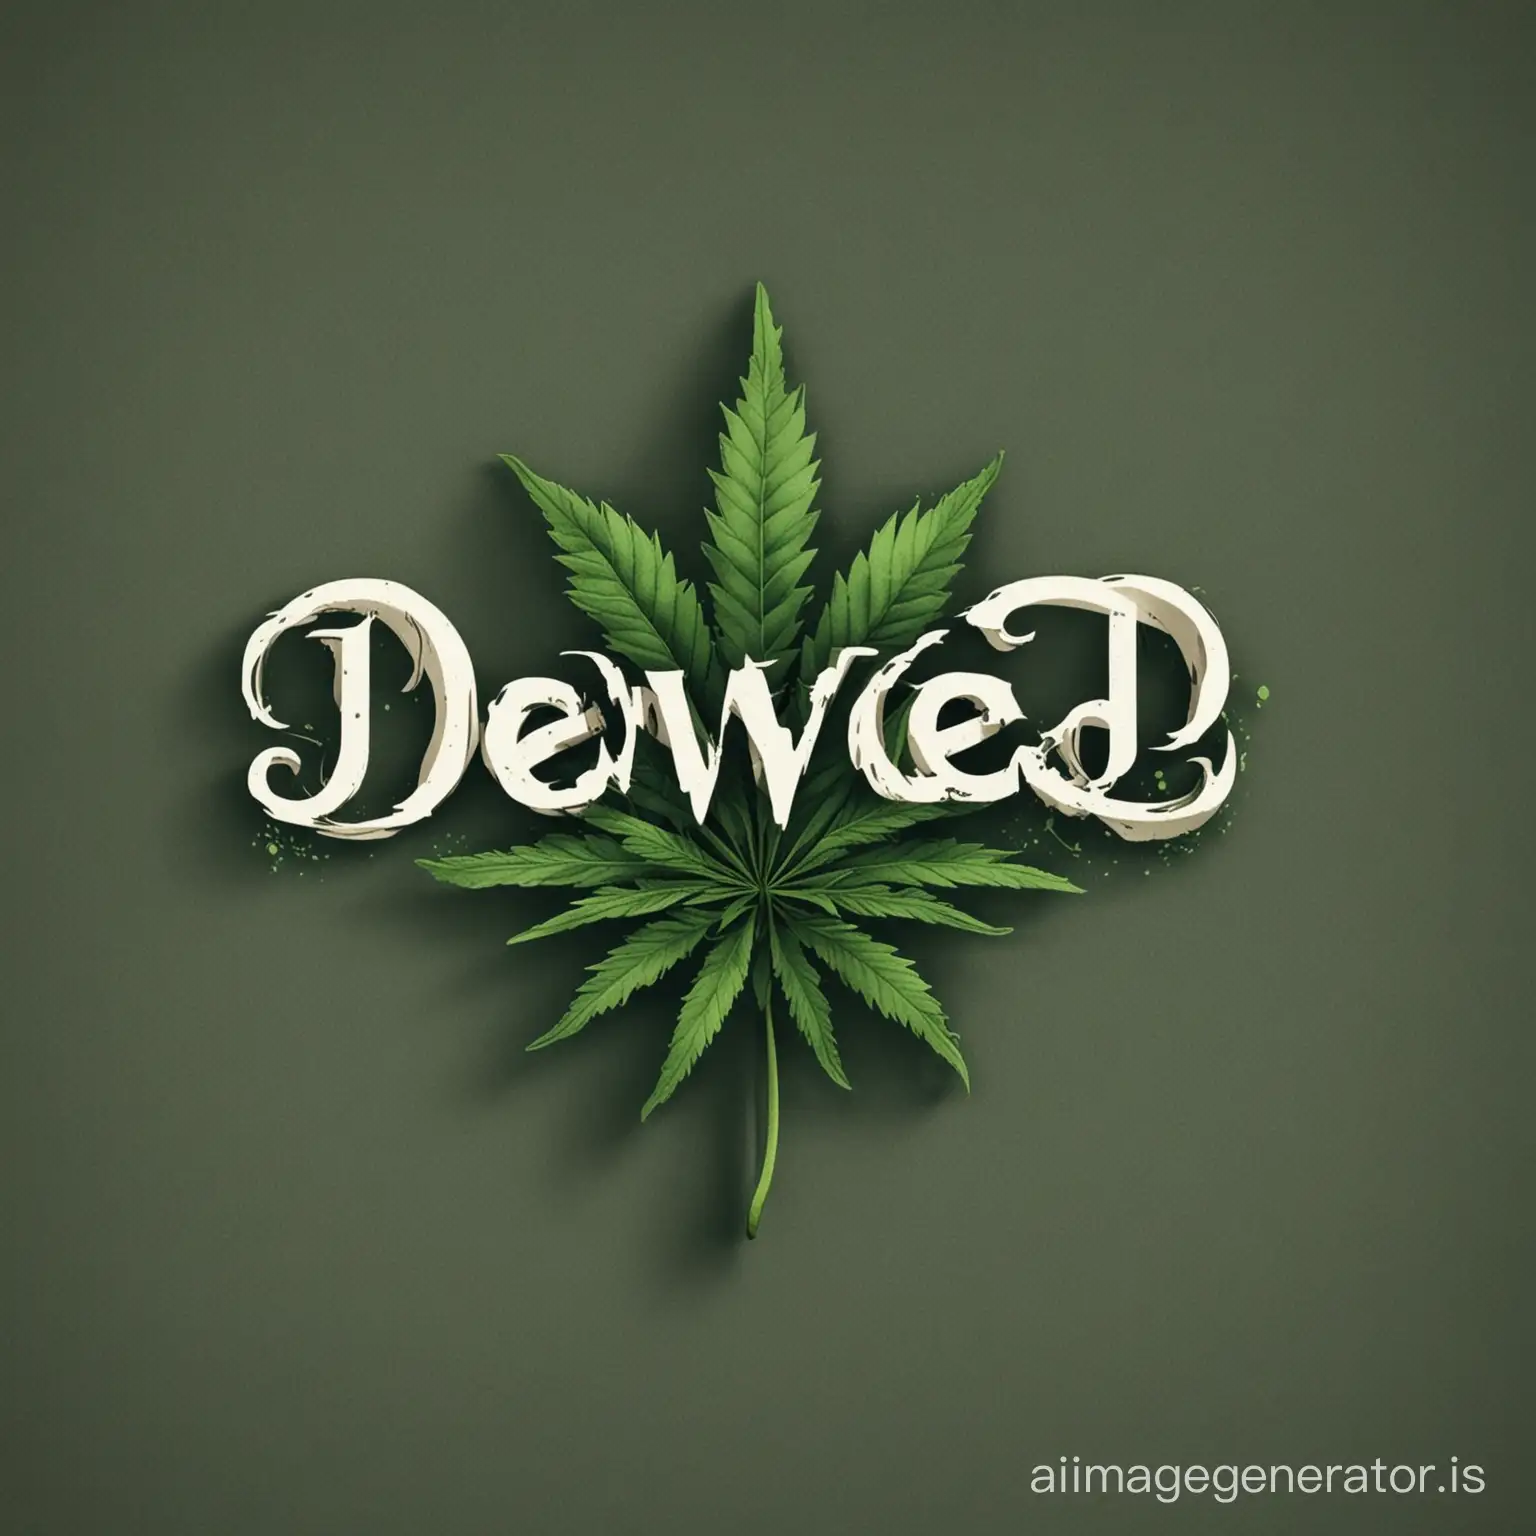 Modern-Marijuana-Business-Logo-Design-with-Vibrant-Green-Leaf-and-Stylish-Typography